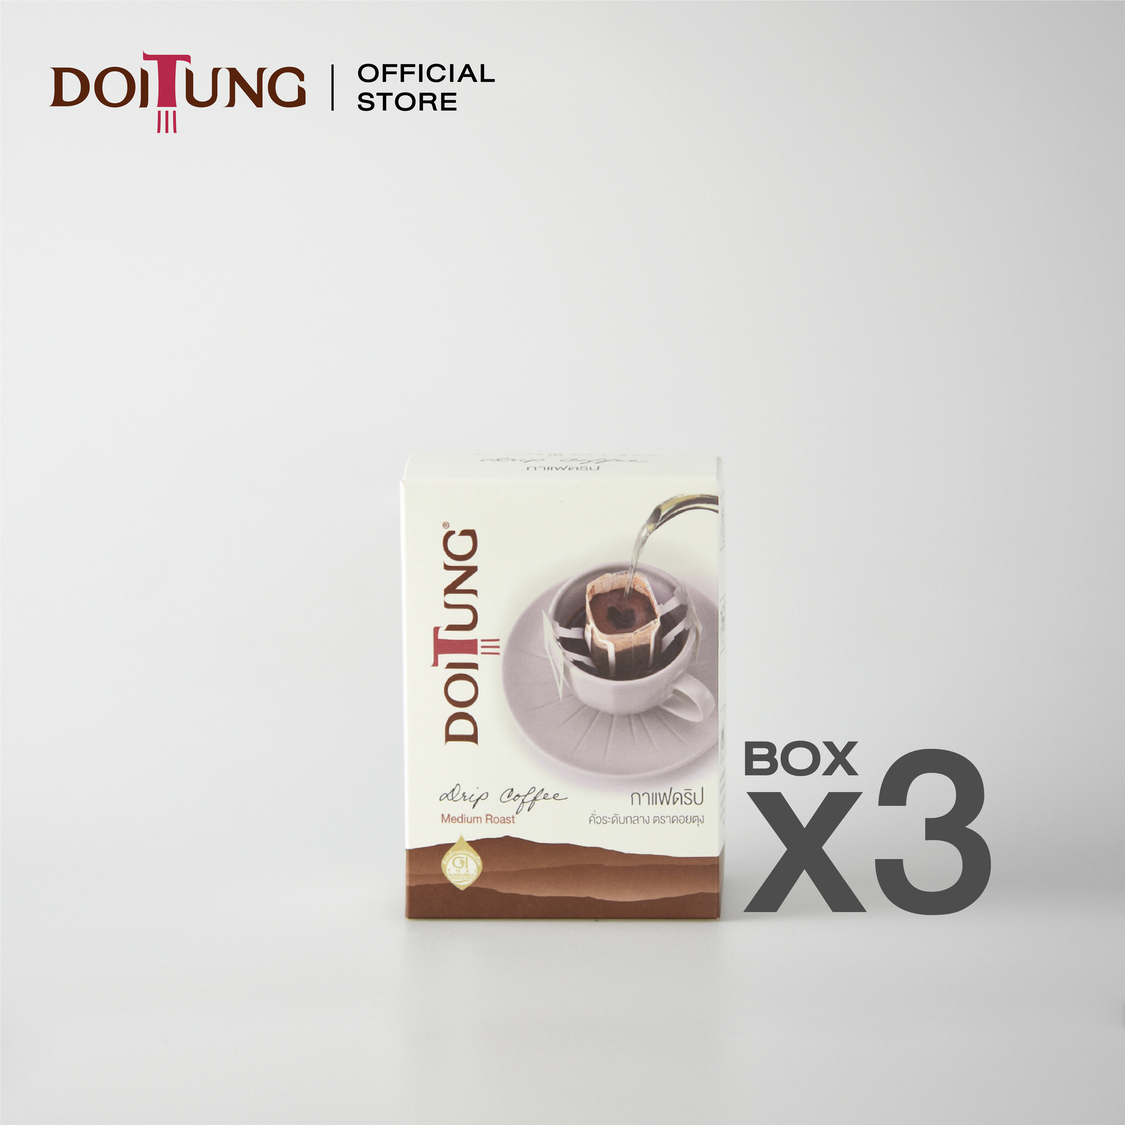 DoiTung Drip Coffee Medium Roast (60 g.) Set 3 กาแฟดริปในถุงกรอง สูตร มีเดี่ยม โรสต์ (60 กรัม) 3 กล่อง ตรา ดอยตุง